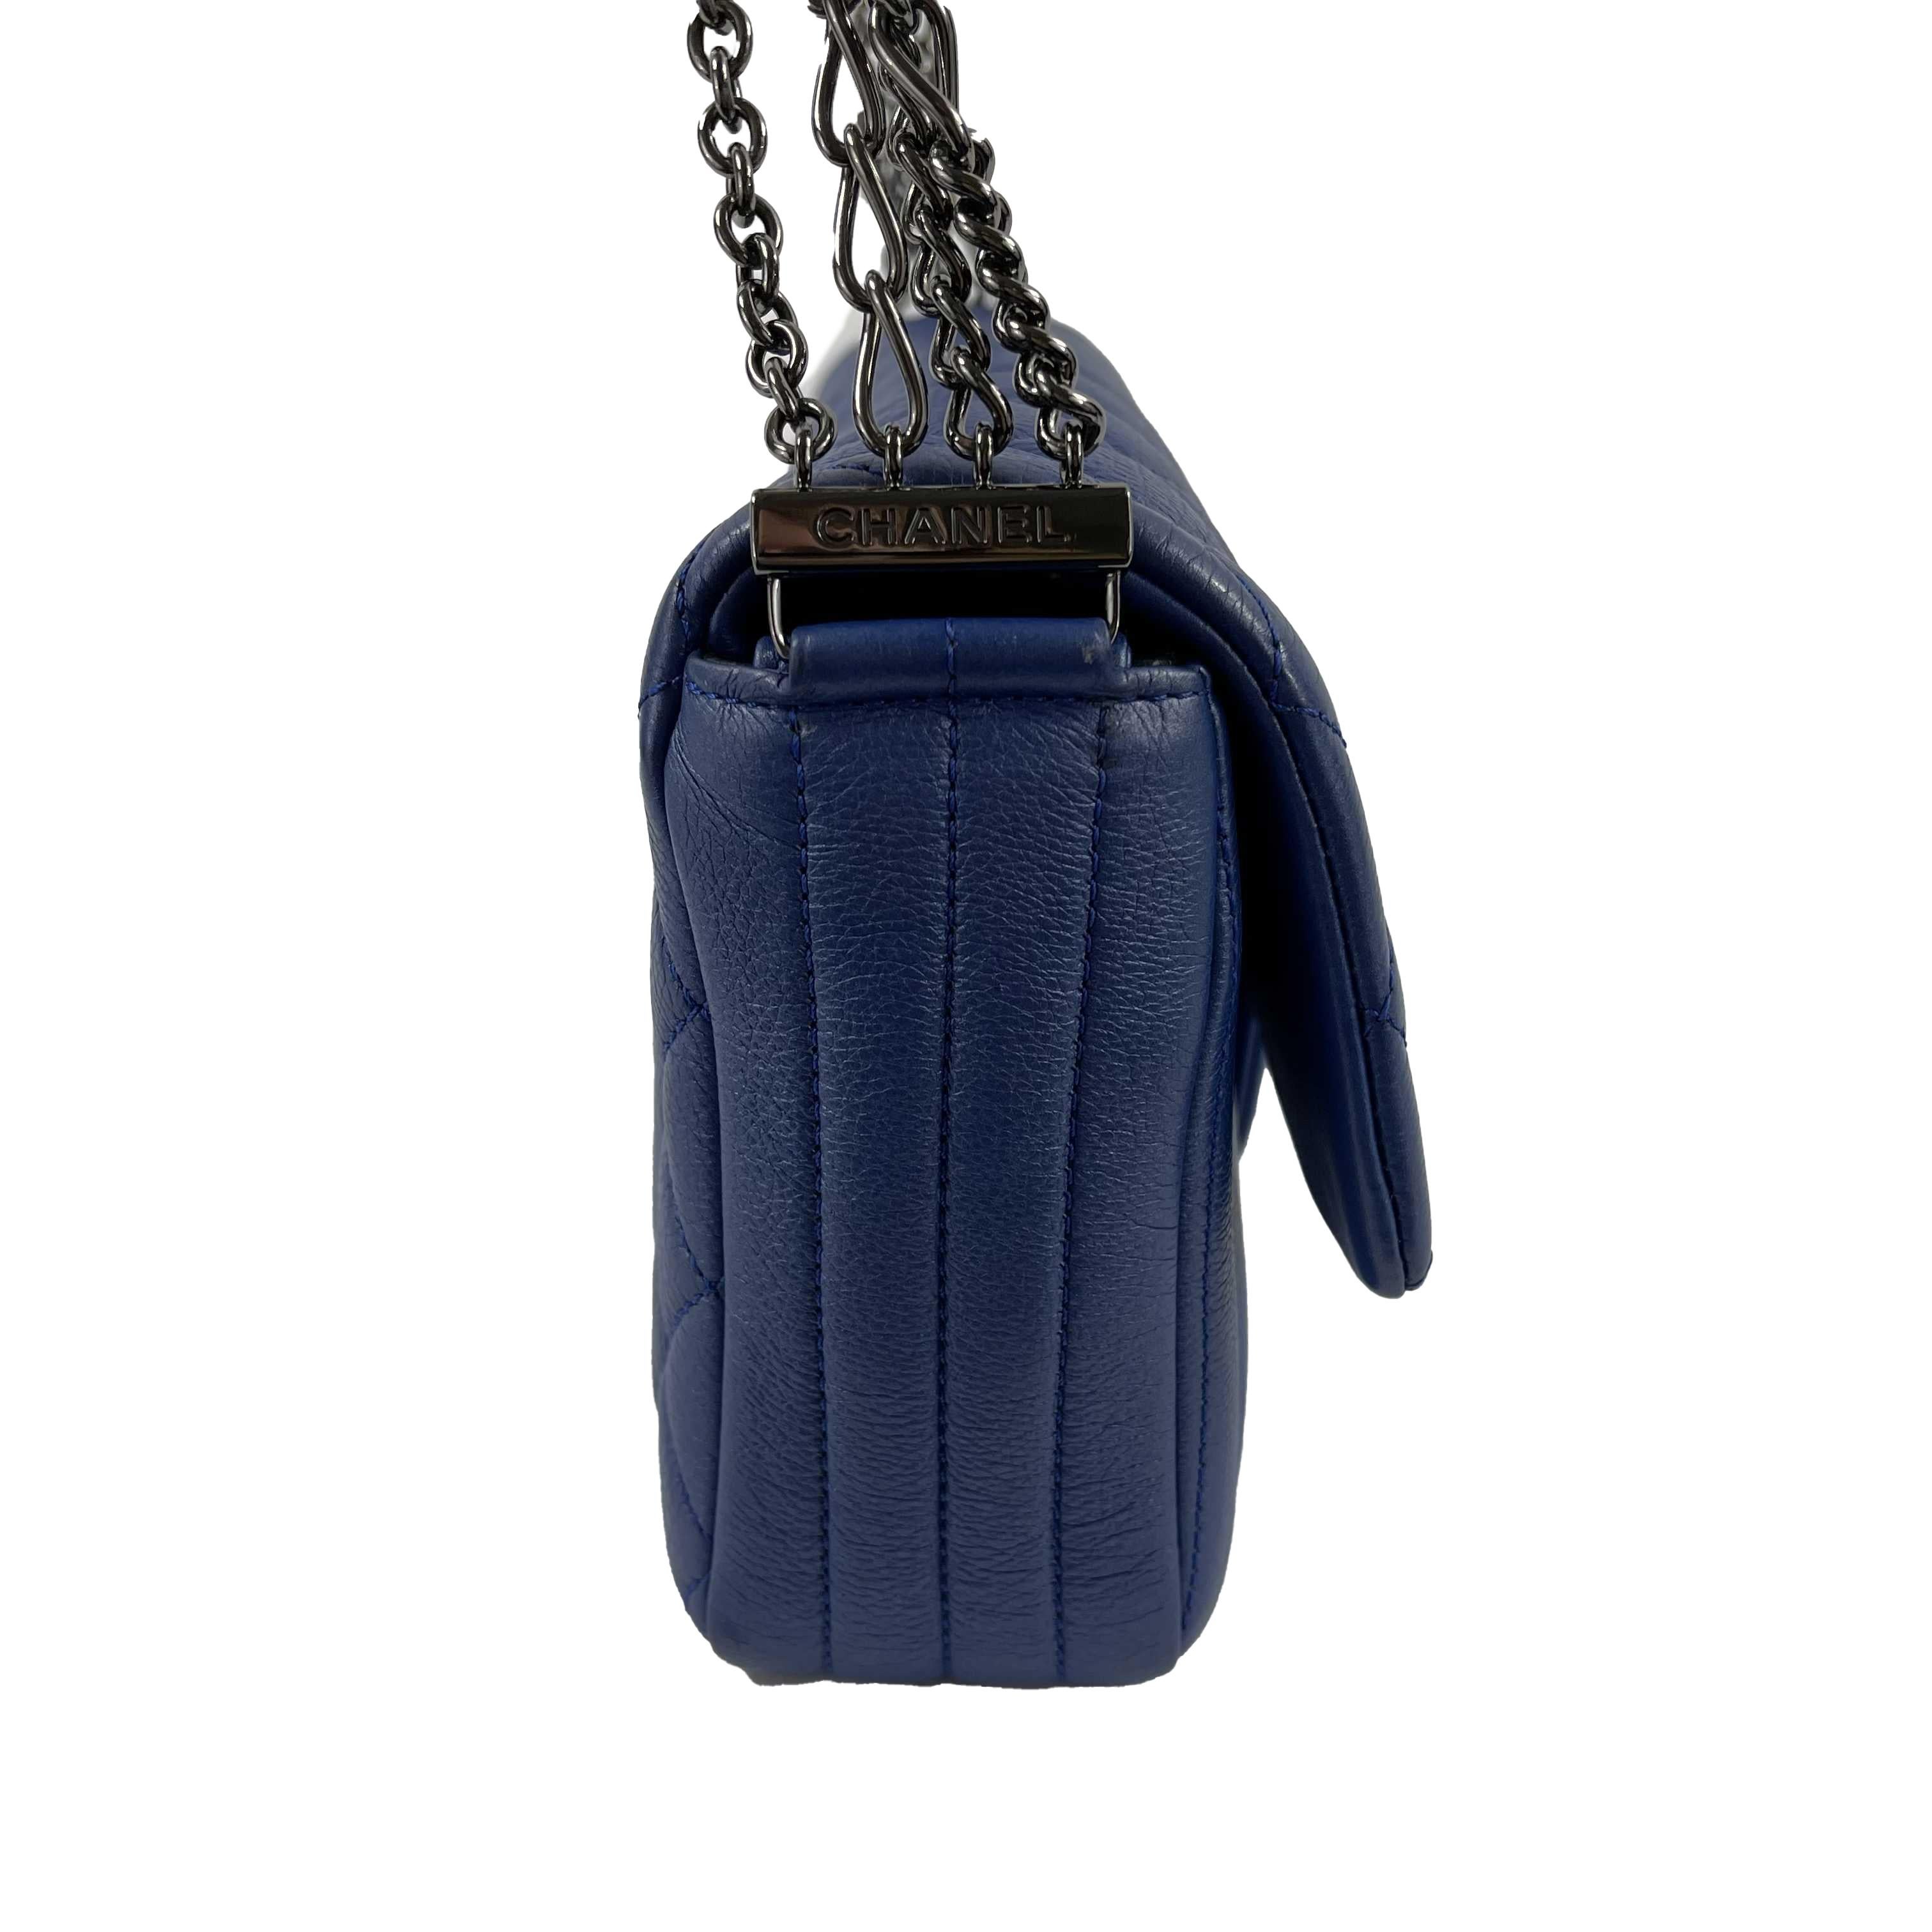 CHANEL Quilted Leather Medium Single Flap Blue / Ruthenium Shoulder Bag 3